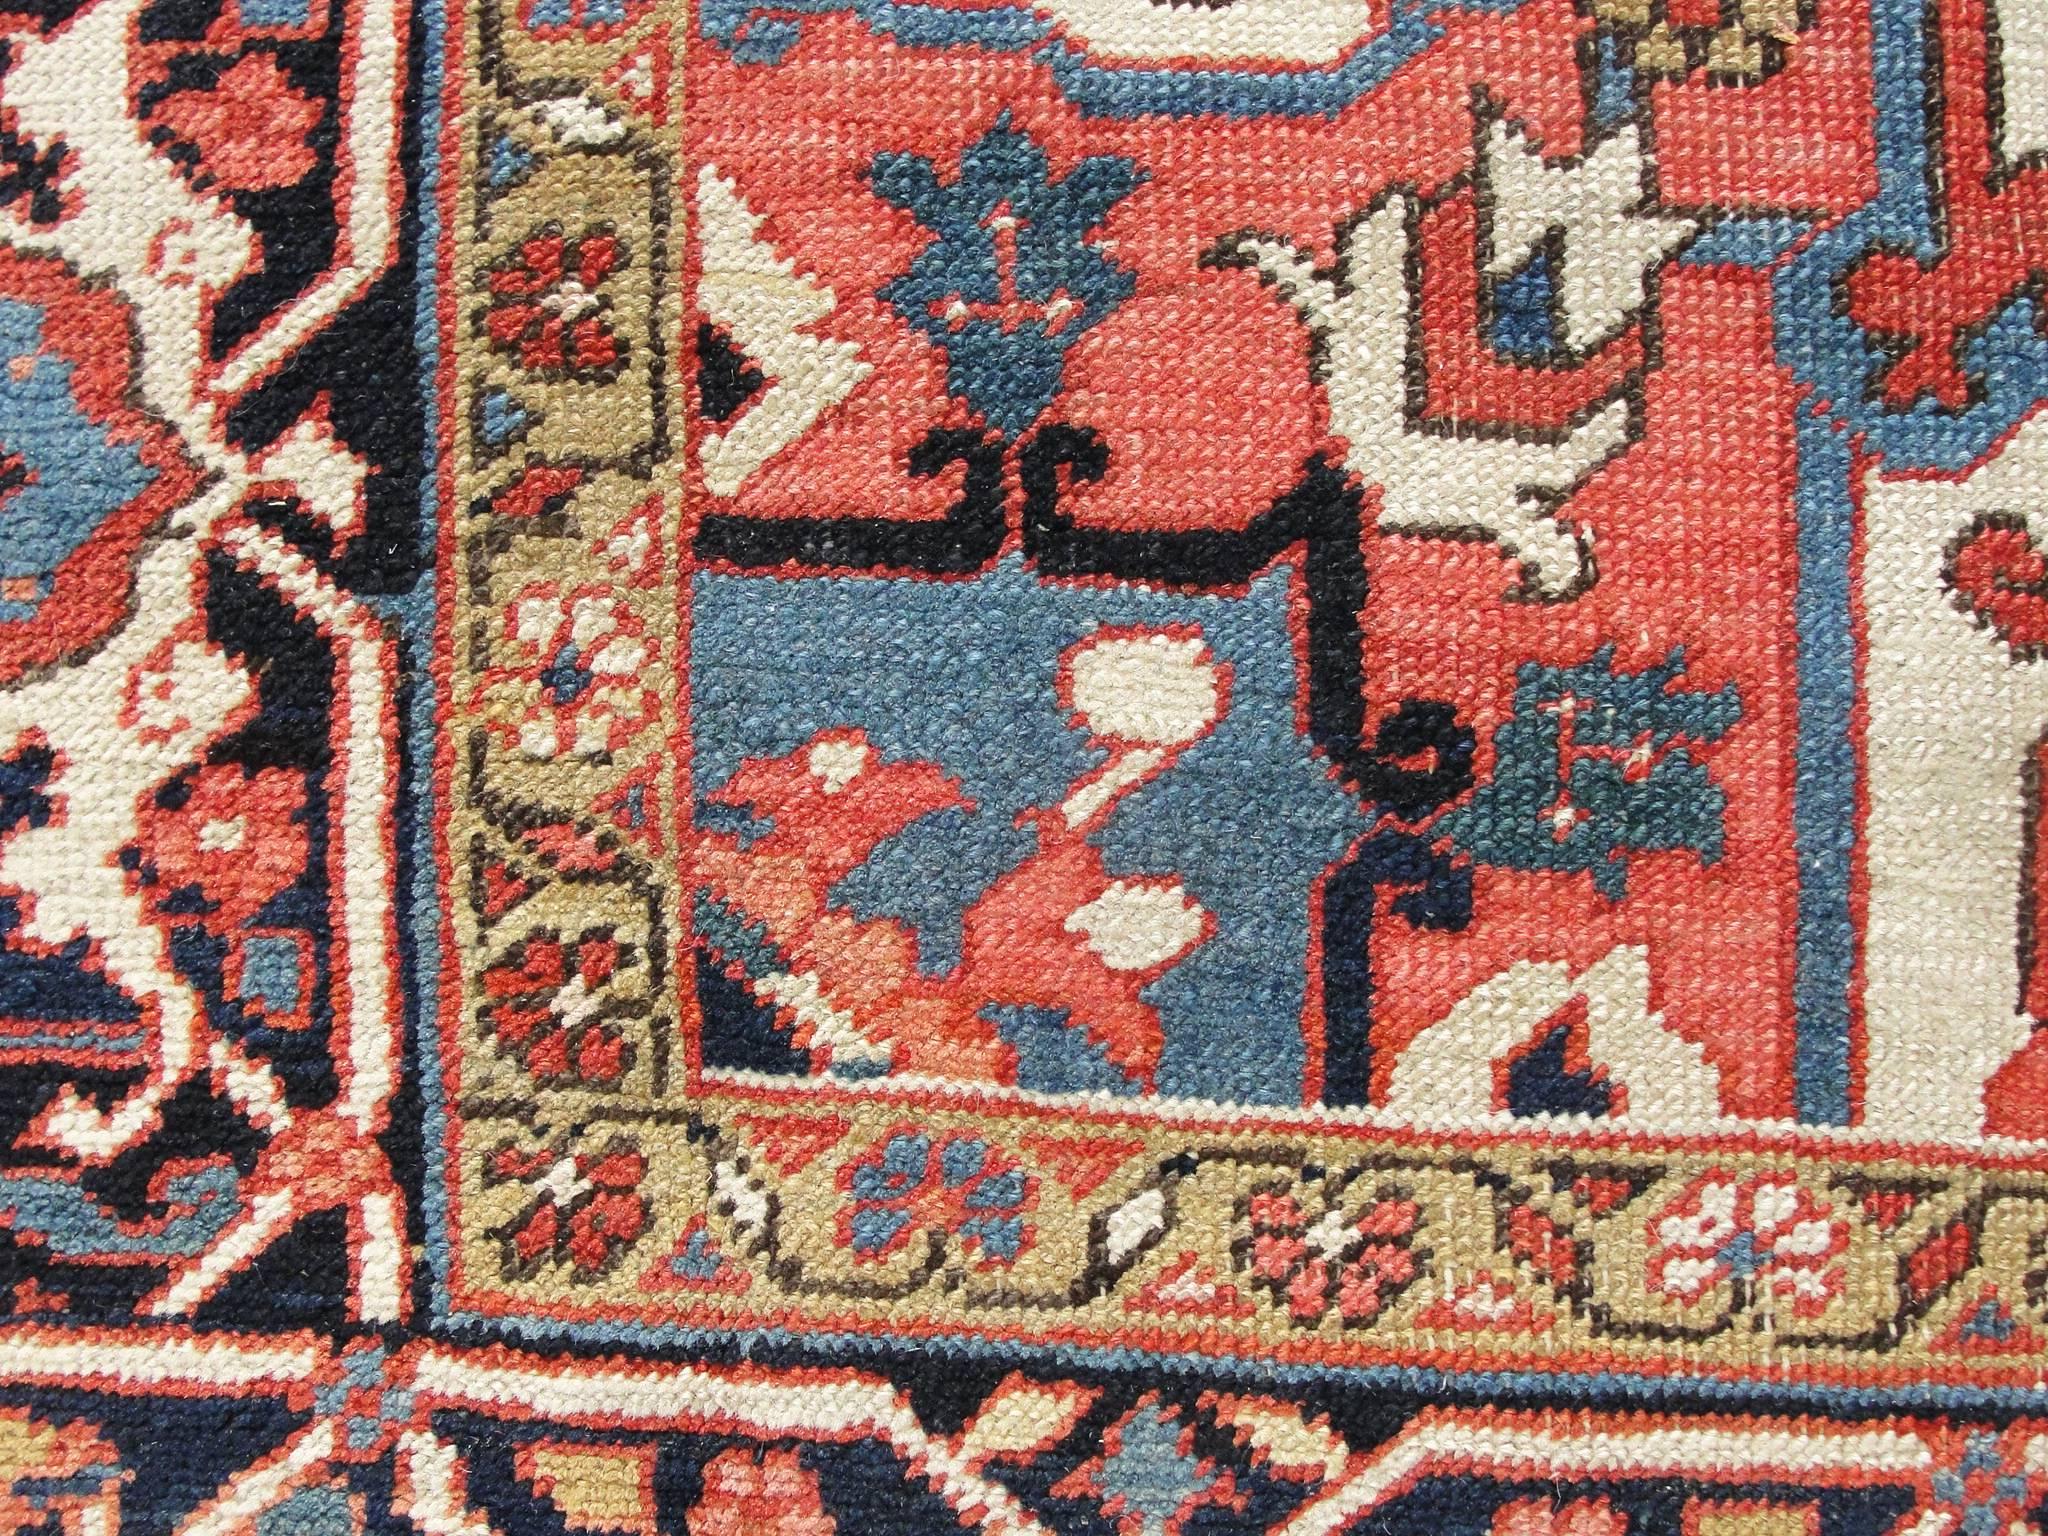  Antiker persischer Serapi-Teppich, 4'11